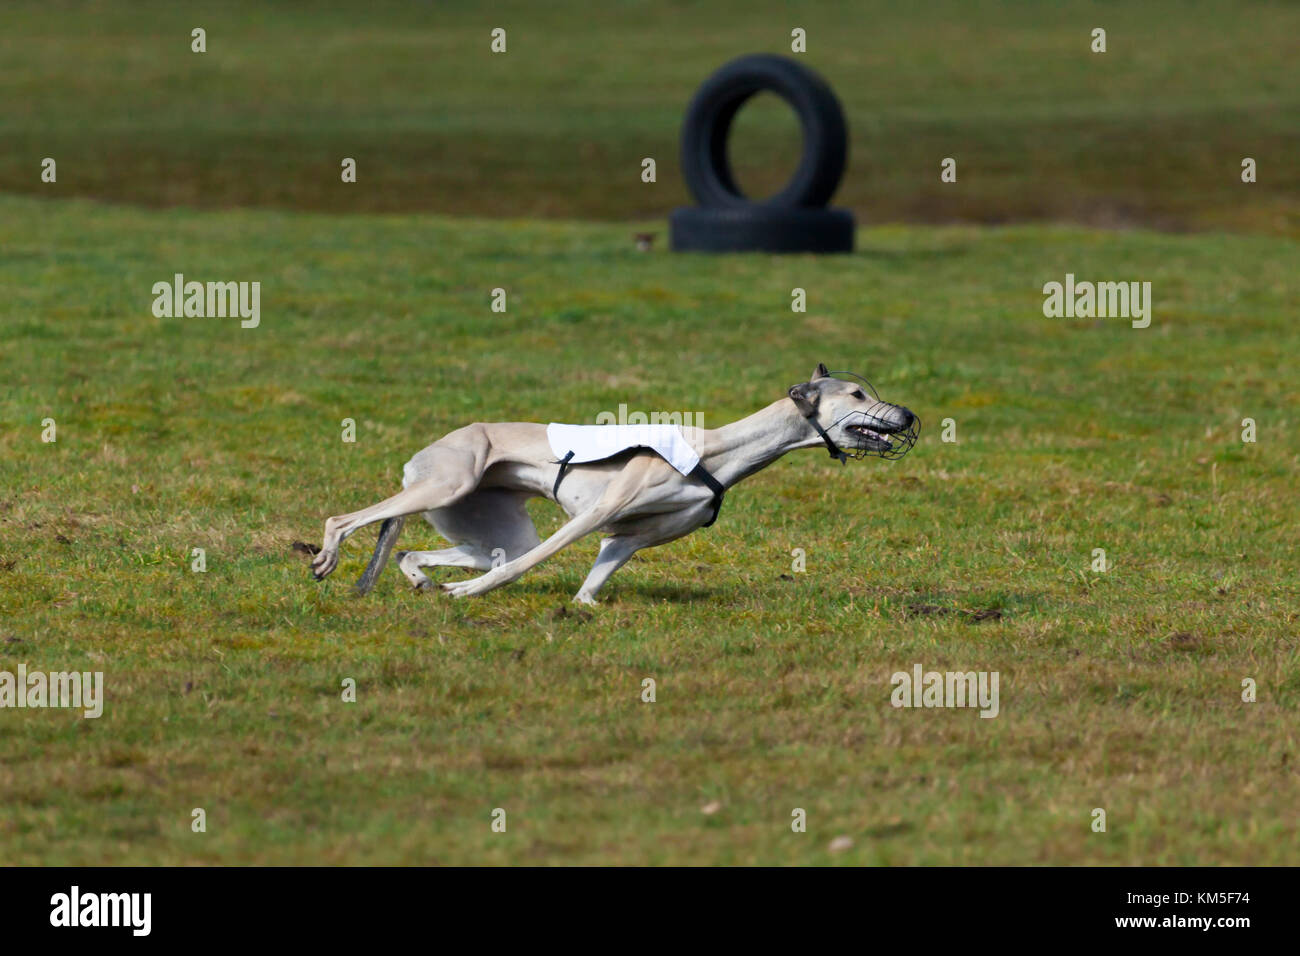 Magyar Agar race dog at coursing contest Stock Photo